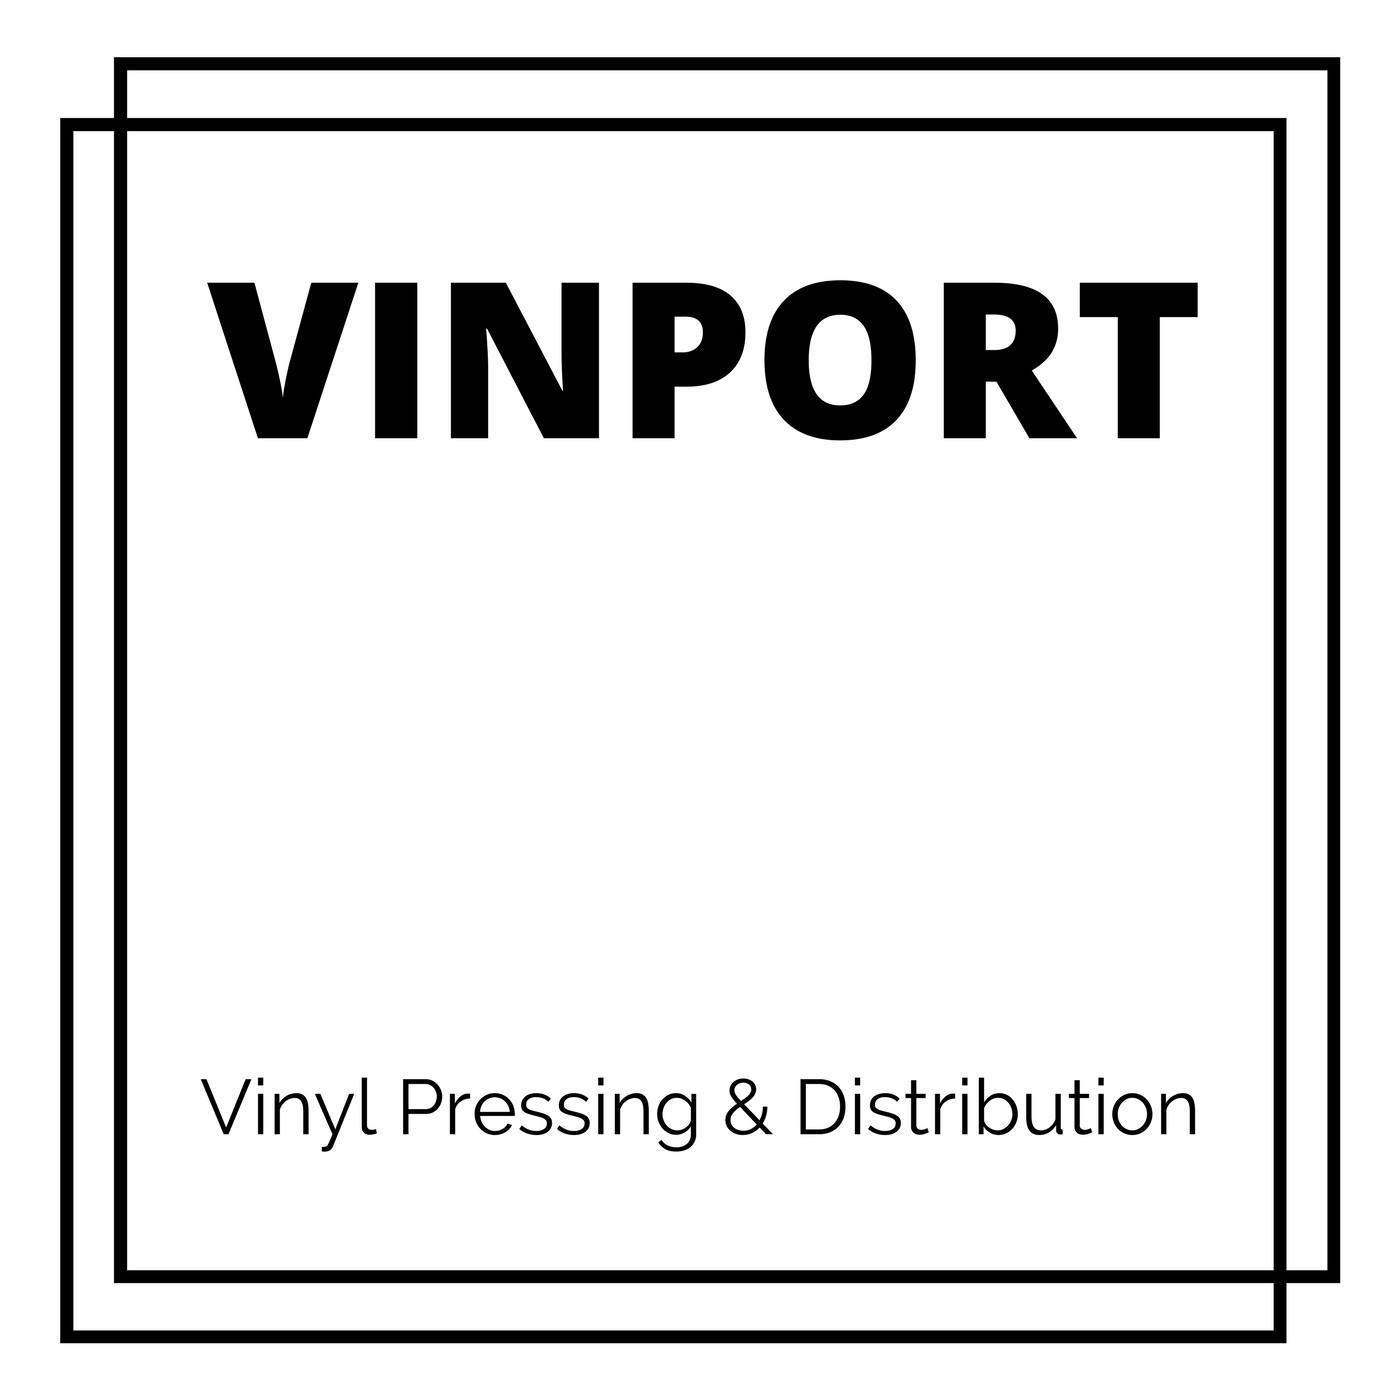 Vinport Ltd.